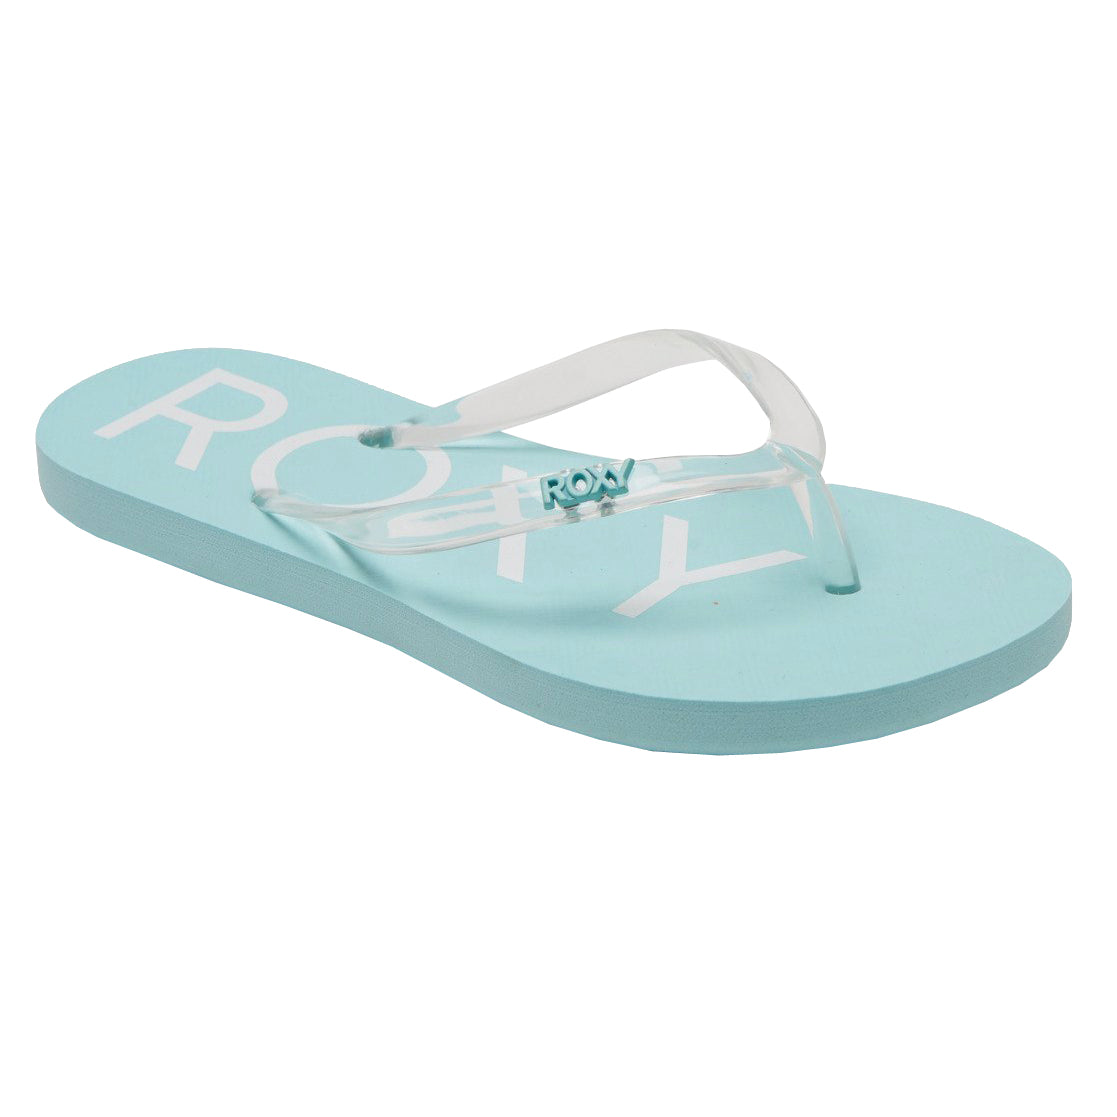 Roxy Viva Jelly Girls Sandal AQA-Aqua 11 C